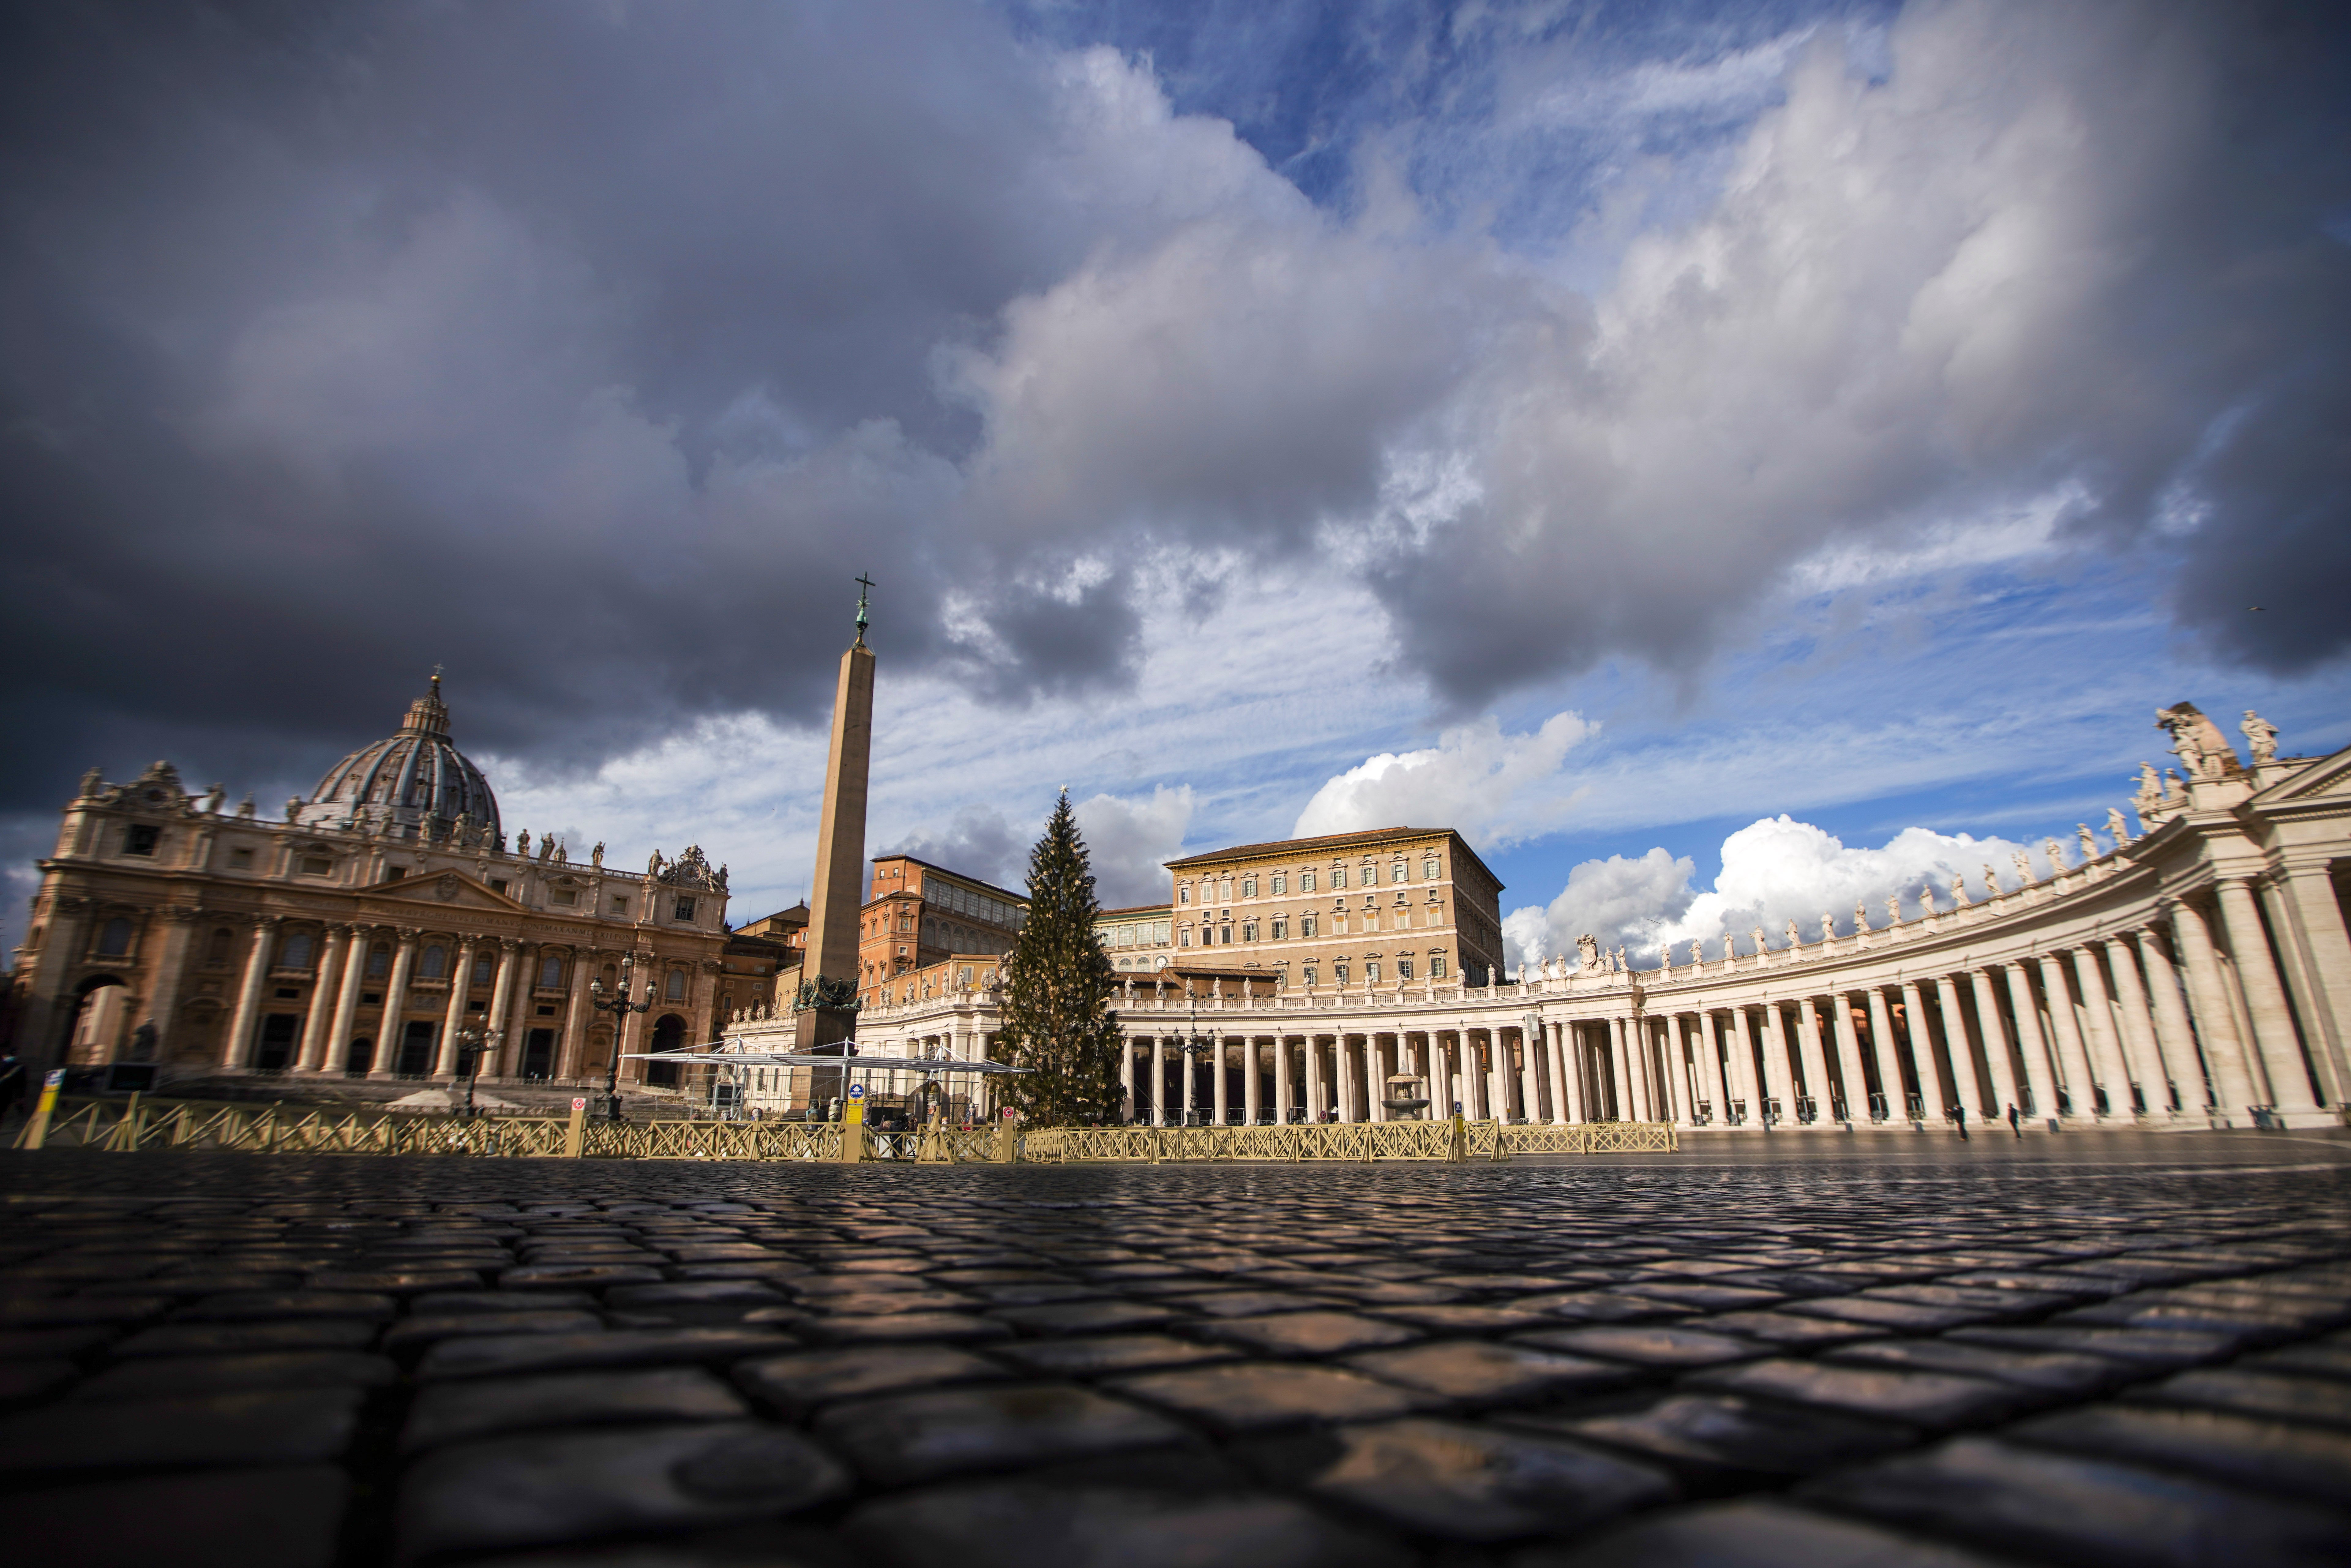 Vatican Scandal